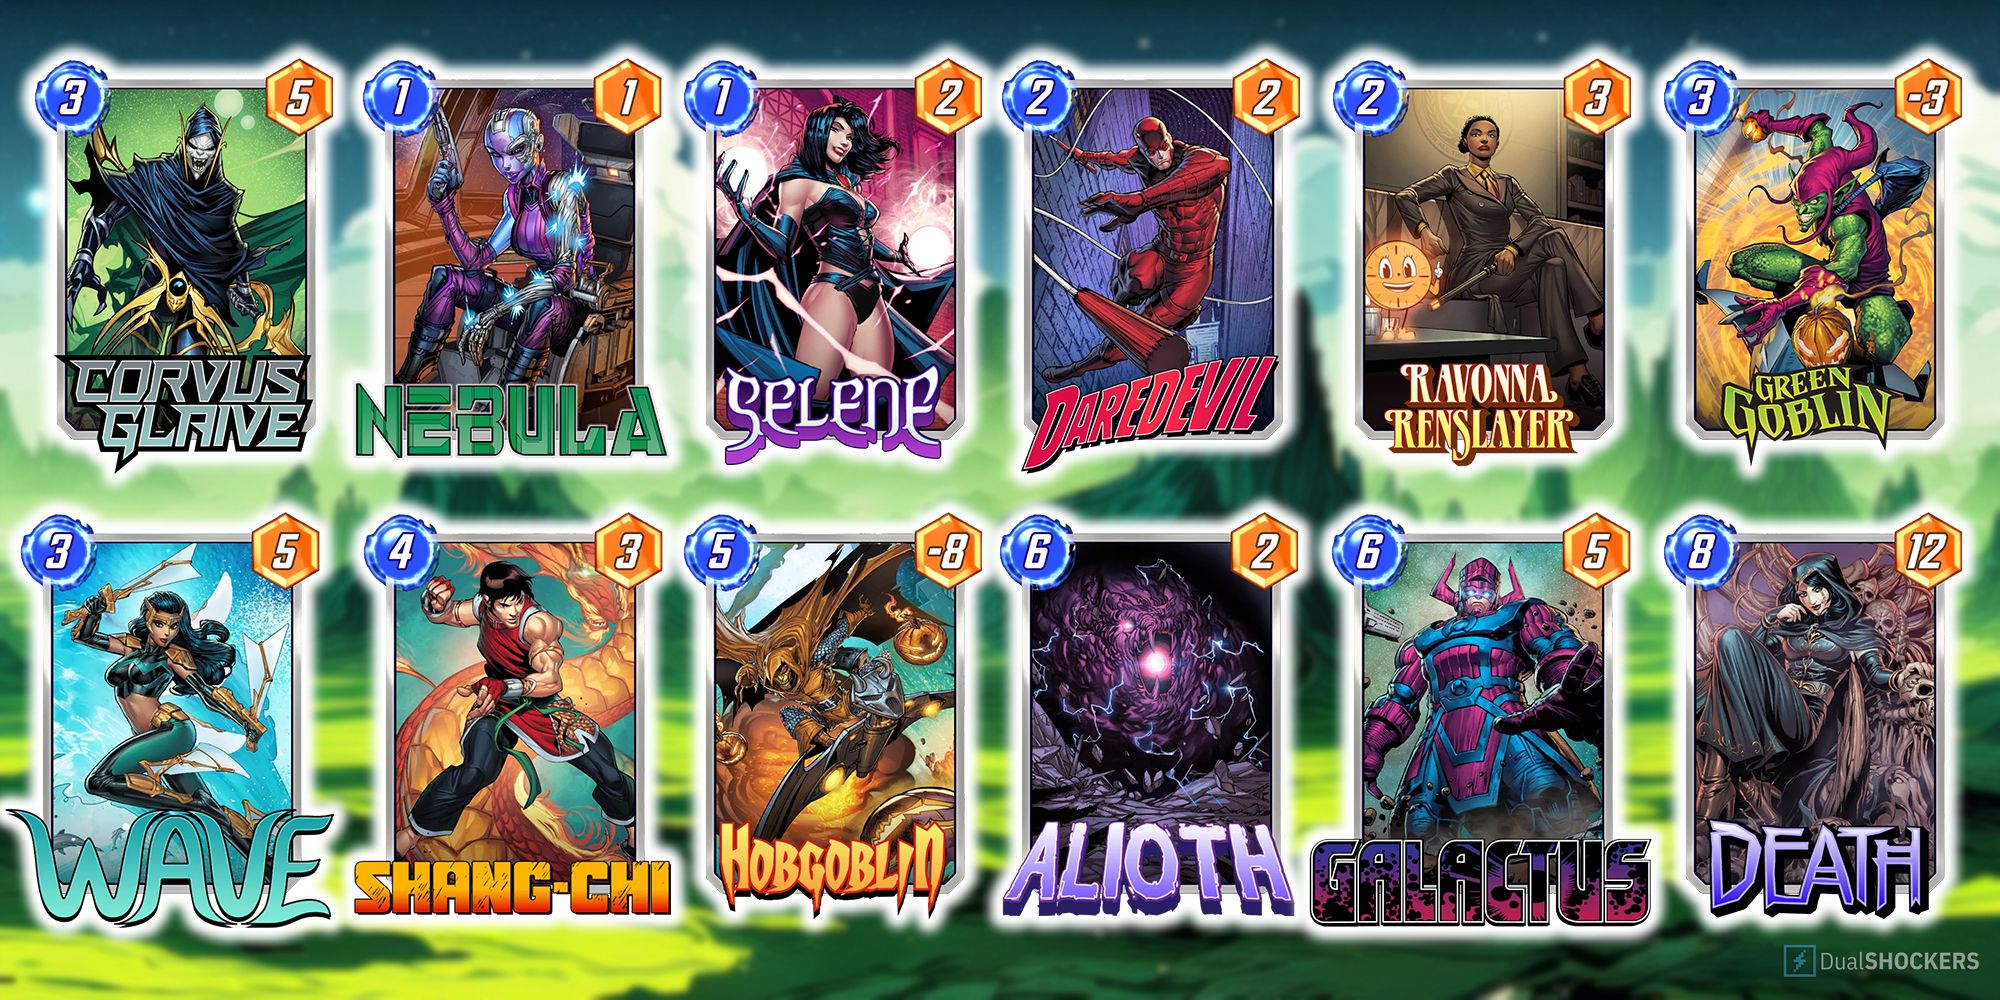 Marvel Snap deck comprised of Corvus Glaive, Nebula, Selene, Daredevil, Ravonna Renslayer, Green Goblin, Wave, Shang-Chi, Hobgoblin, Alioth, Galactus, and Death.